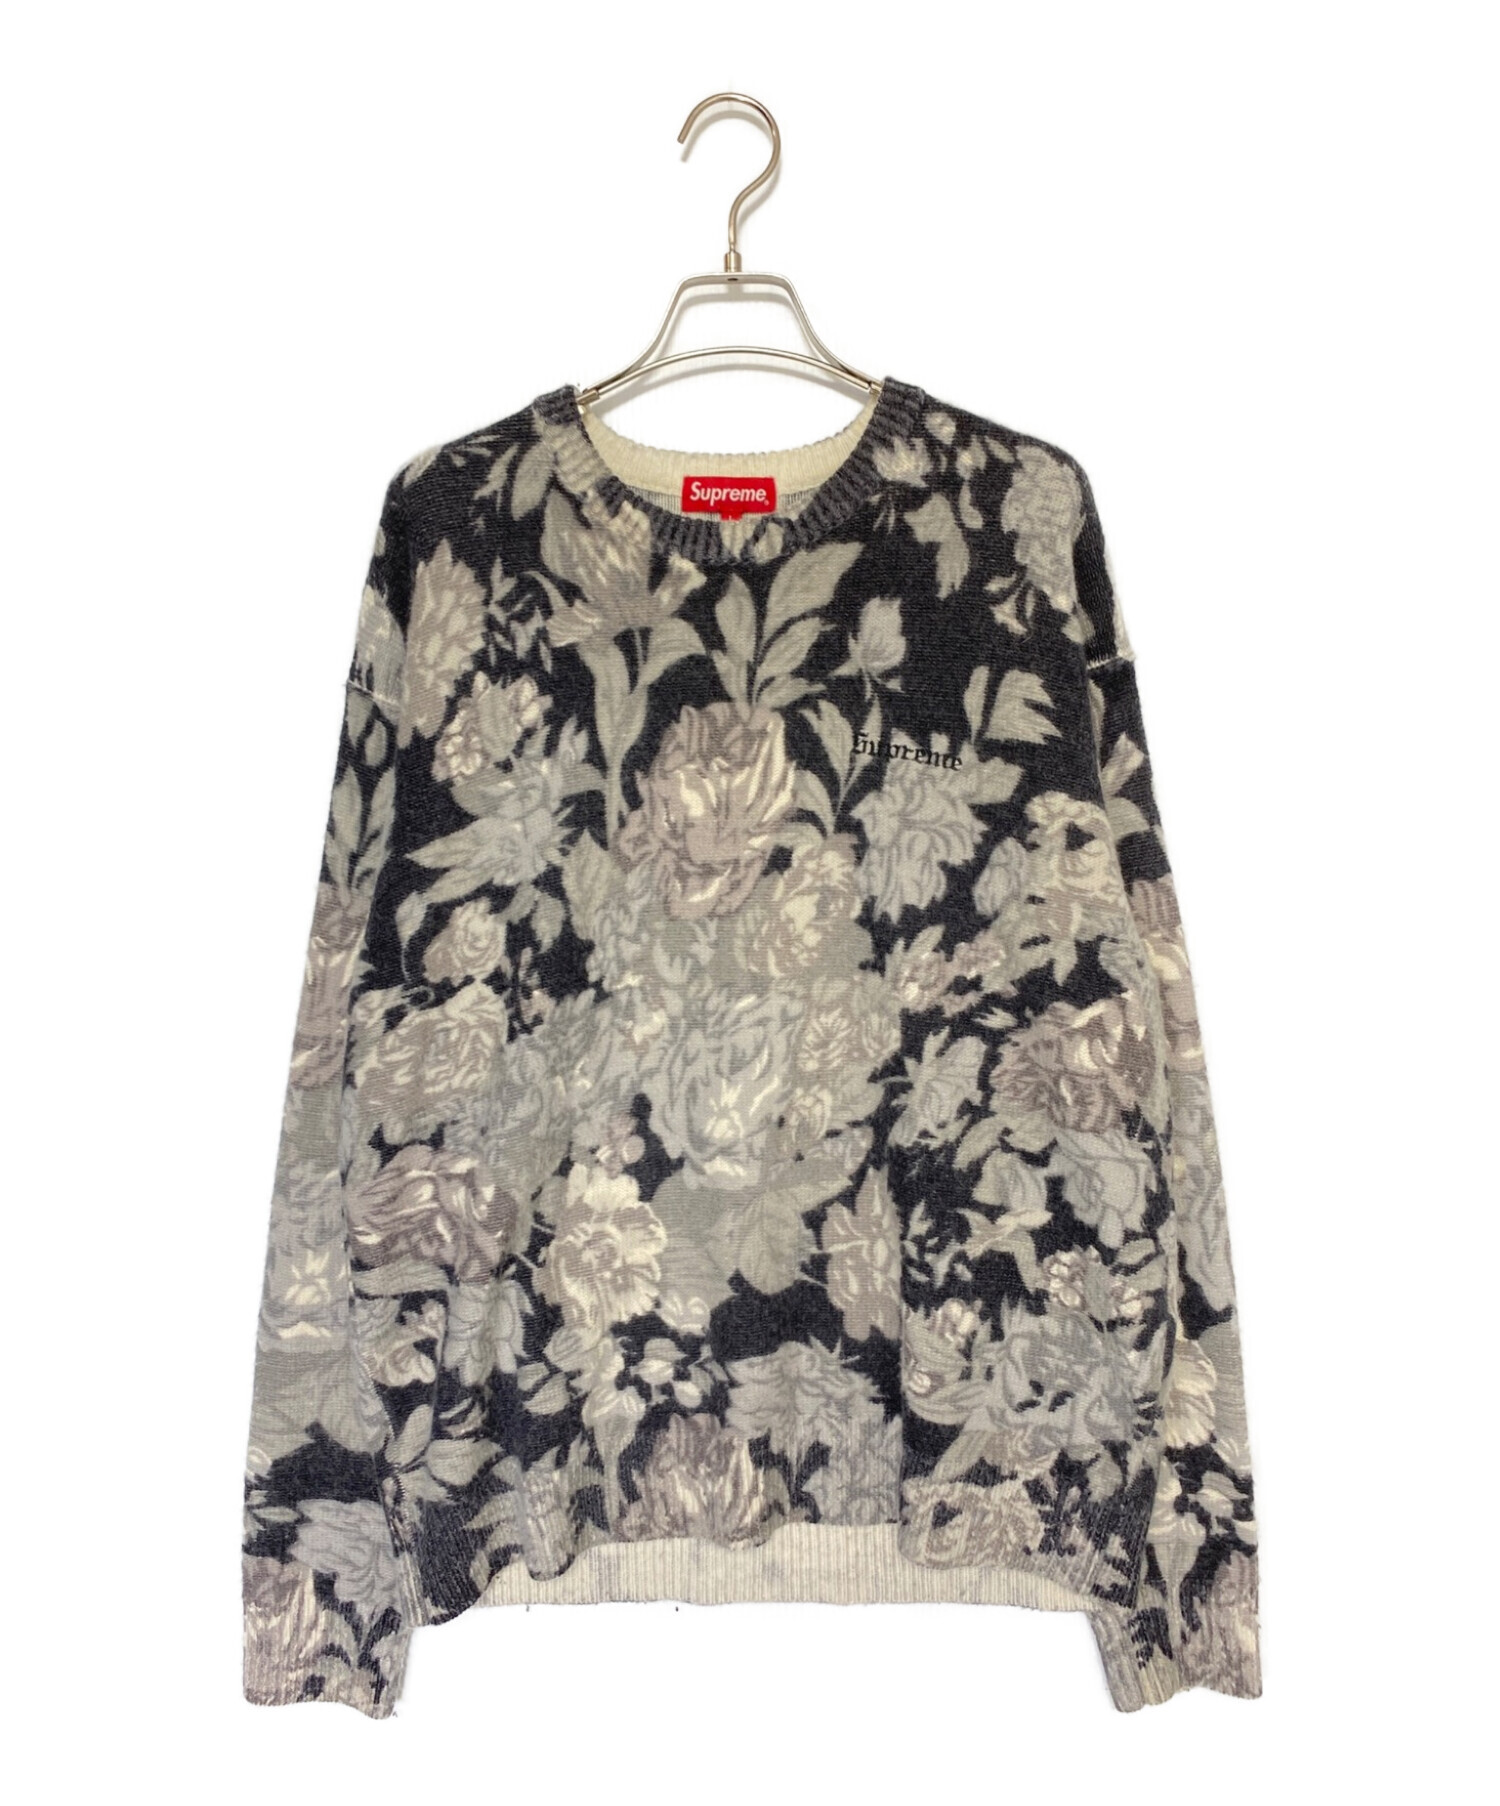 Supreme Printed Floral Angora Sweater 名作